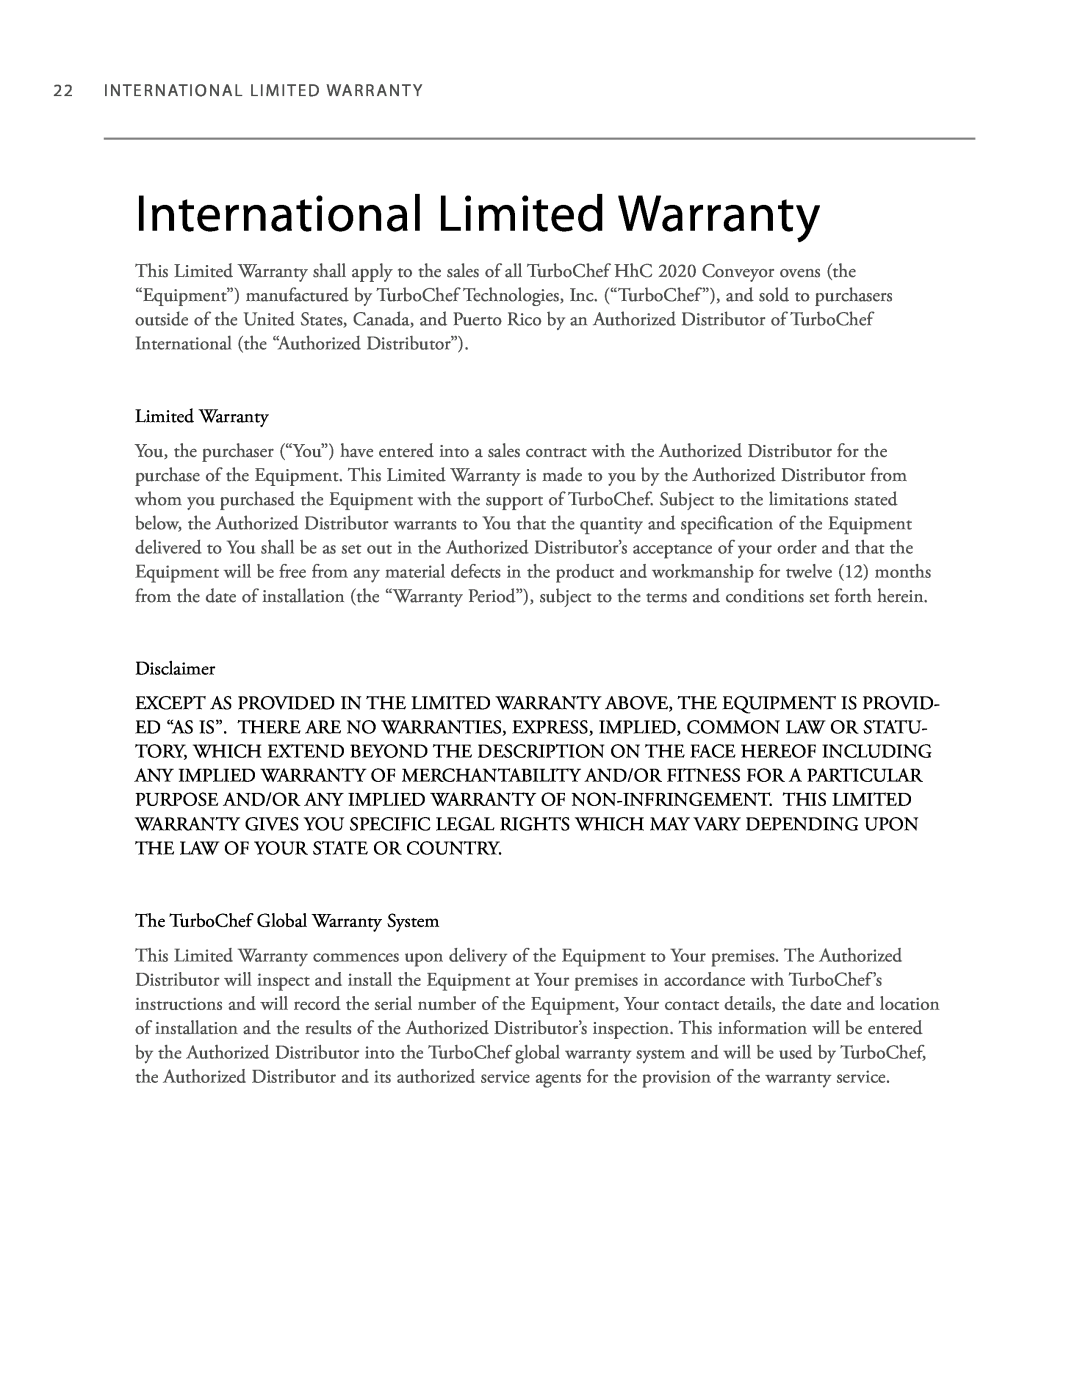 Turbo Chef Technologies 2020 HIGH h manual International Limited Warranty, International Limited Warrant Y 